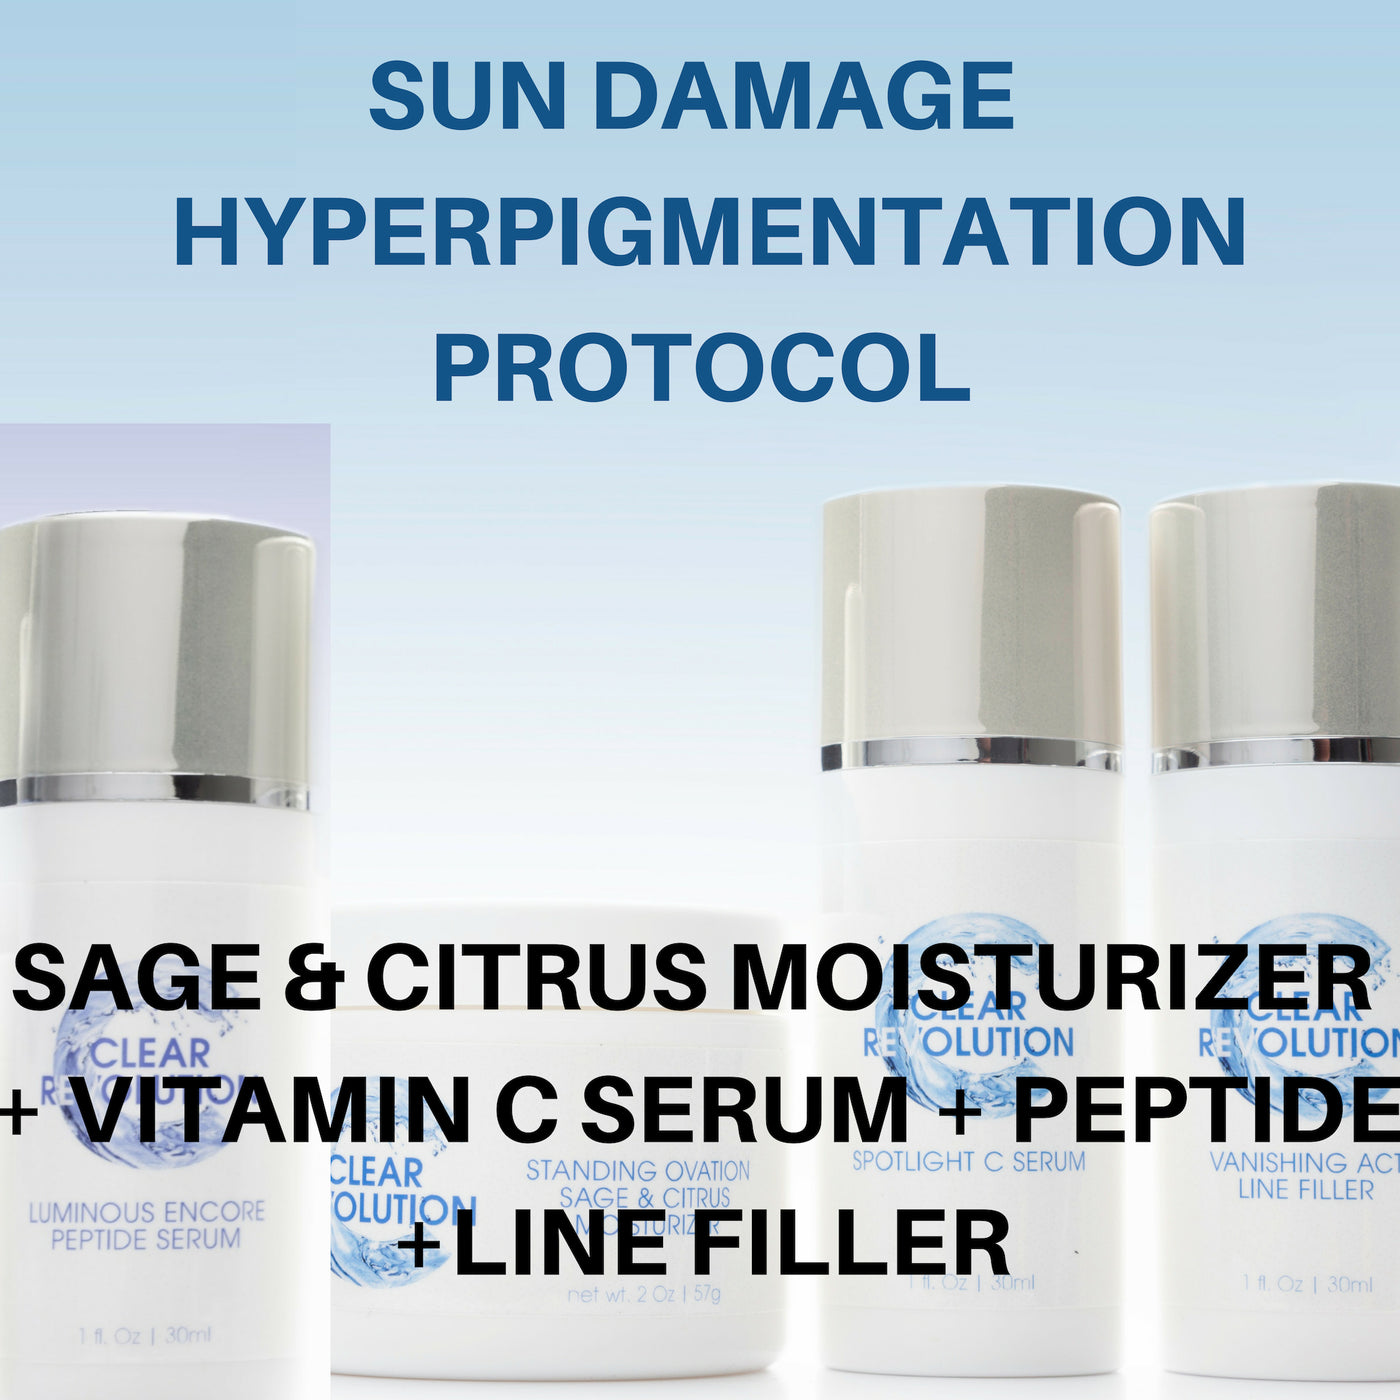 Sun Damage - Hyperpigmentation Protocol